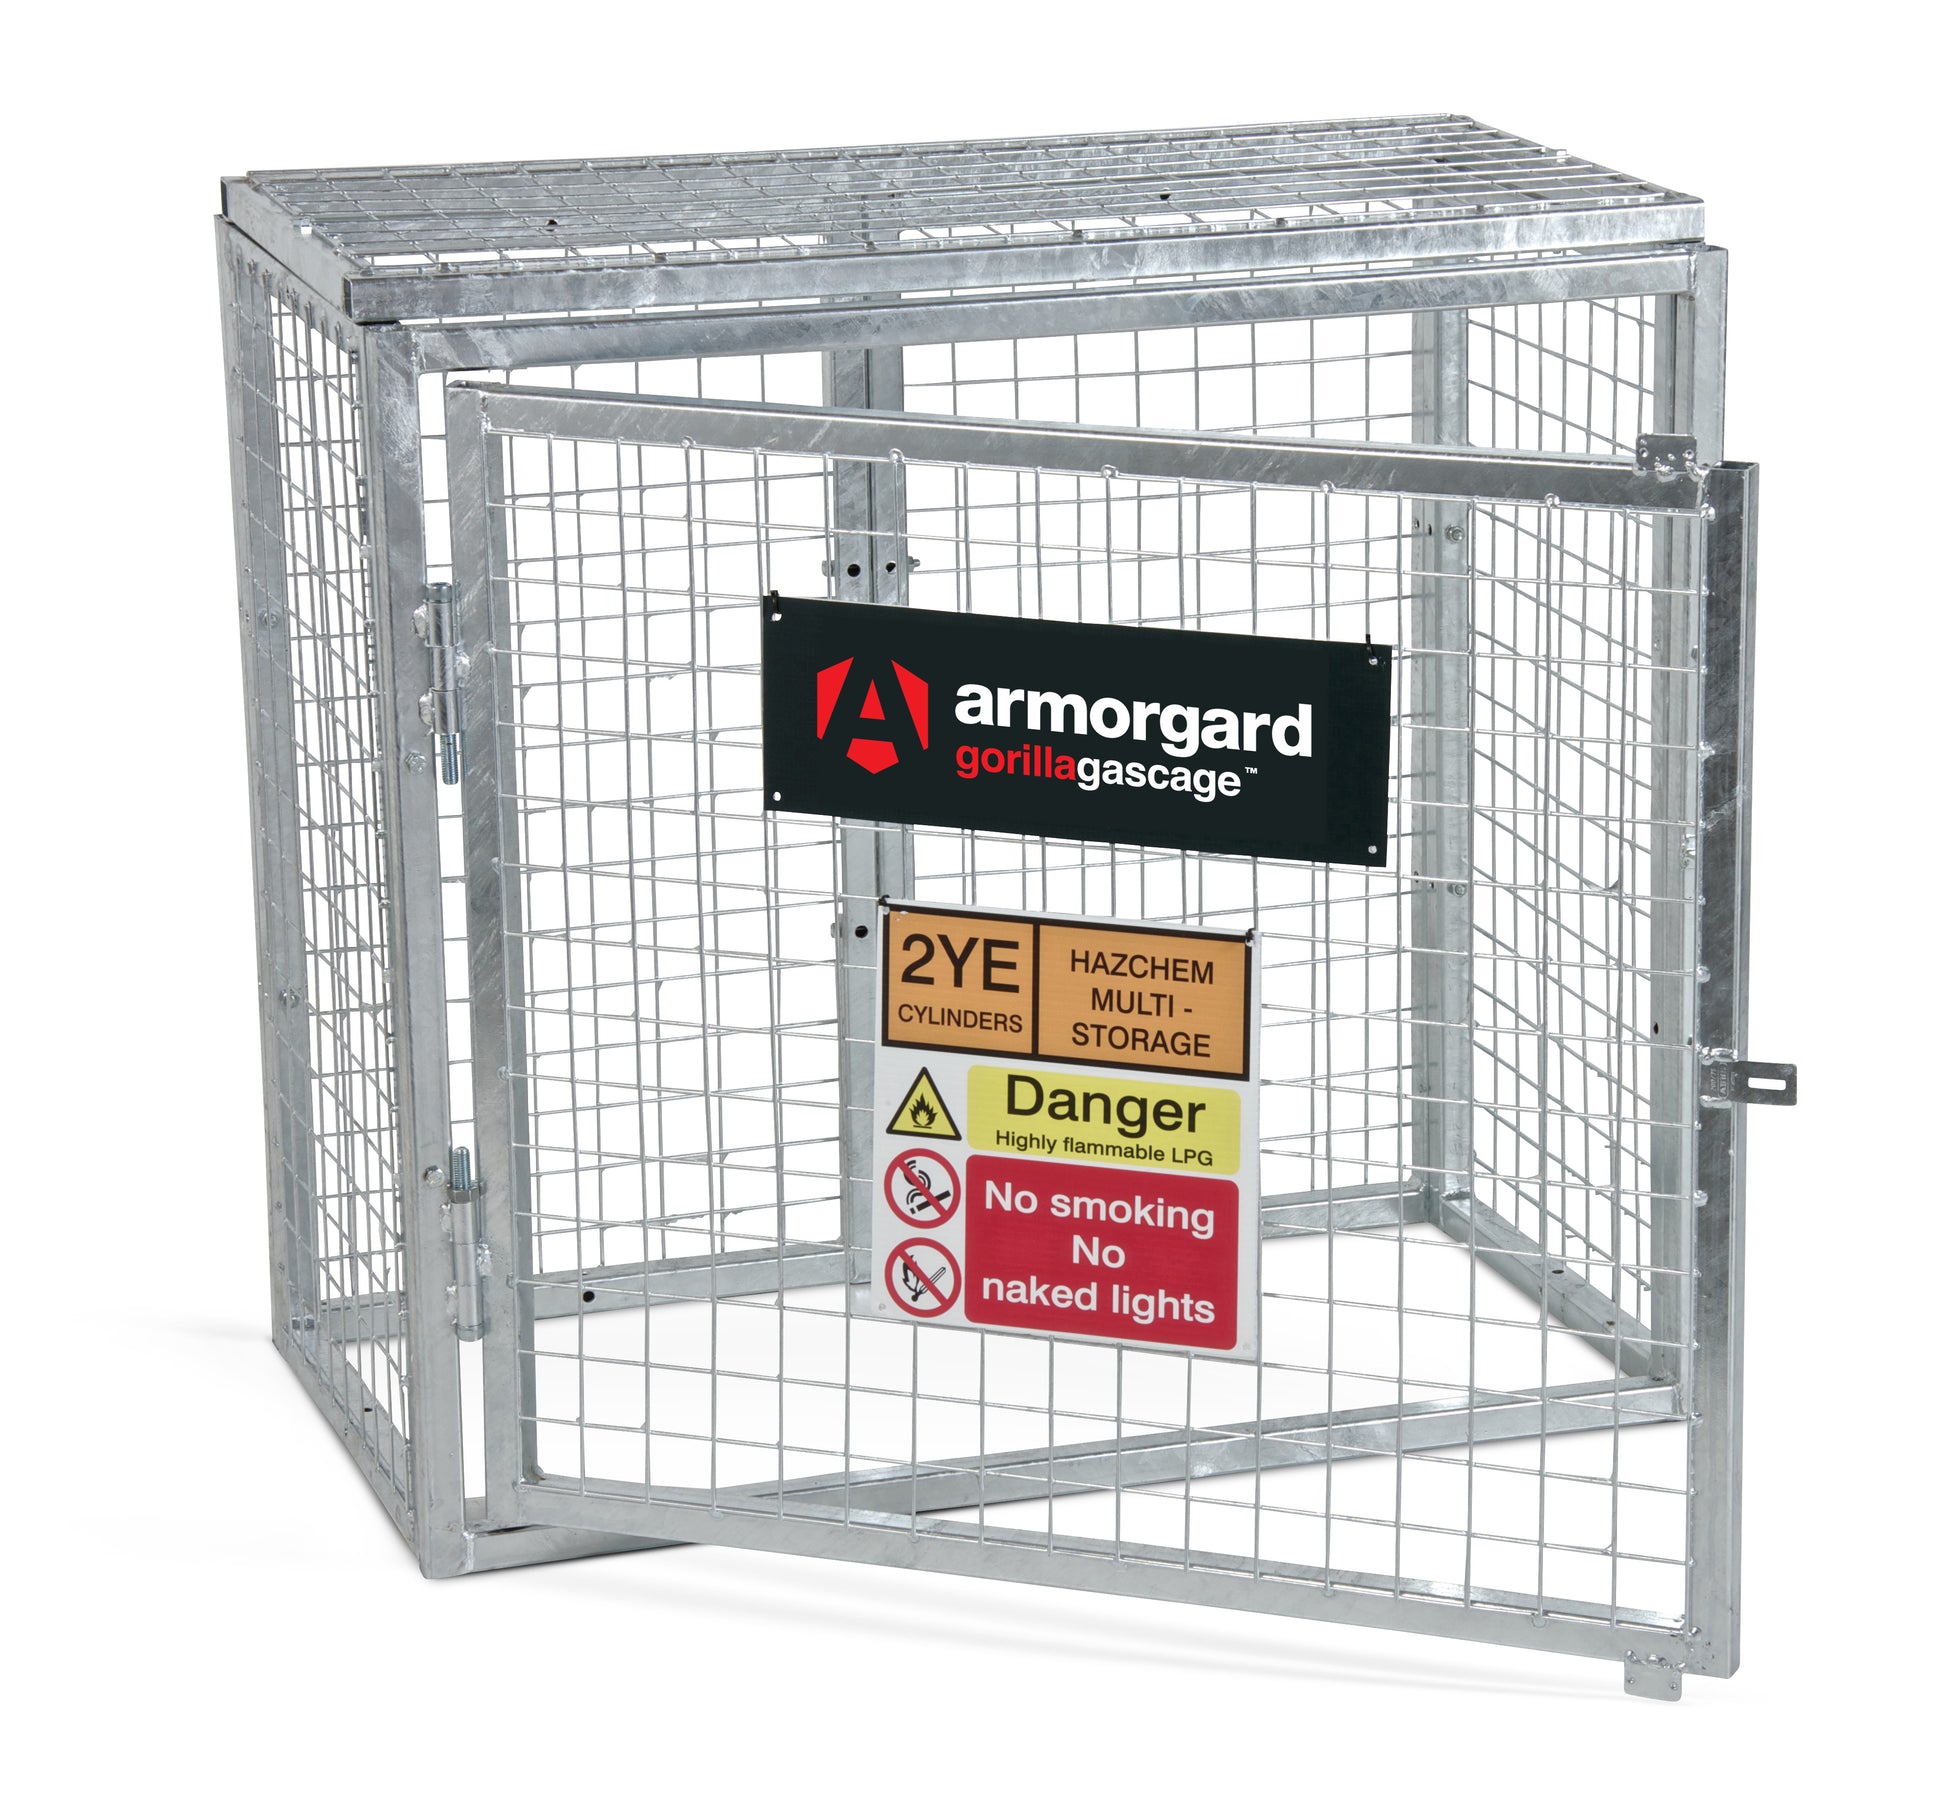 Armorgard - Gorilla Gas Cage 1012x563x931